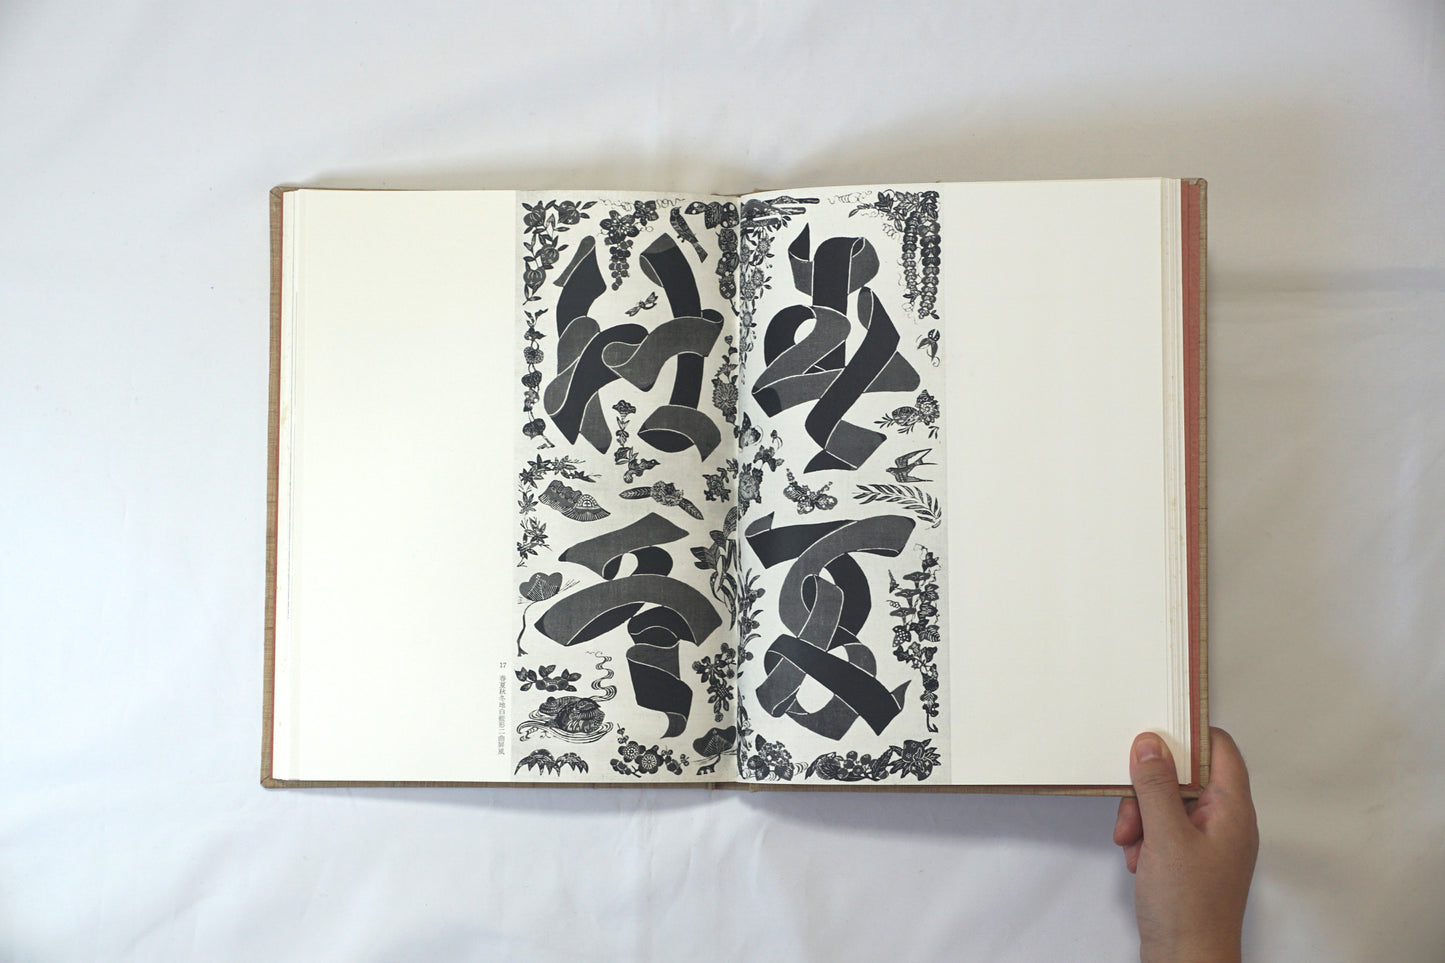 Self-selected collection of Keisuke Serizawa works, top and bottom set